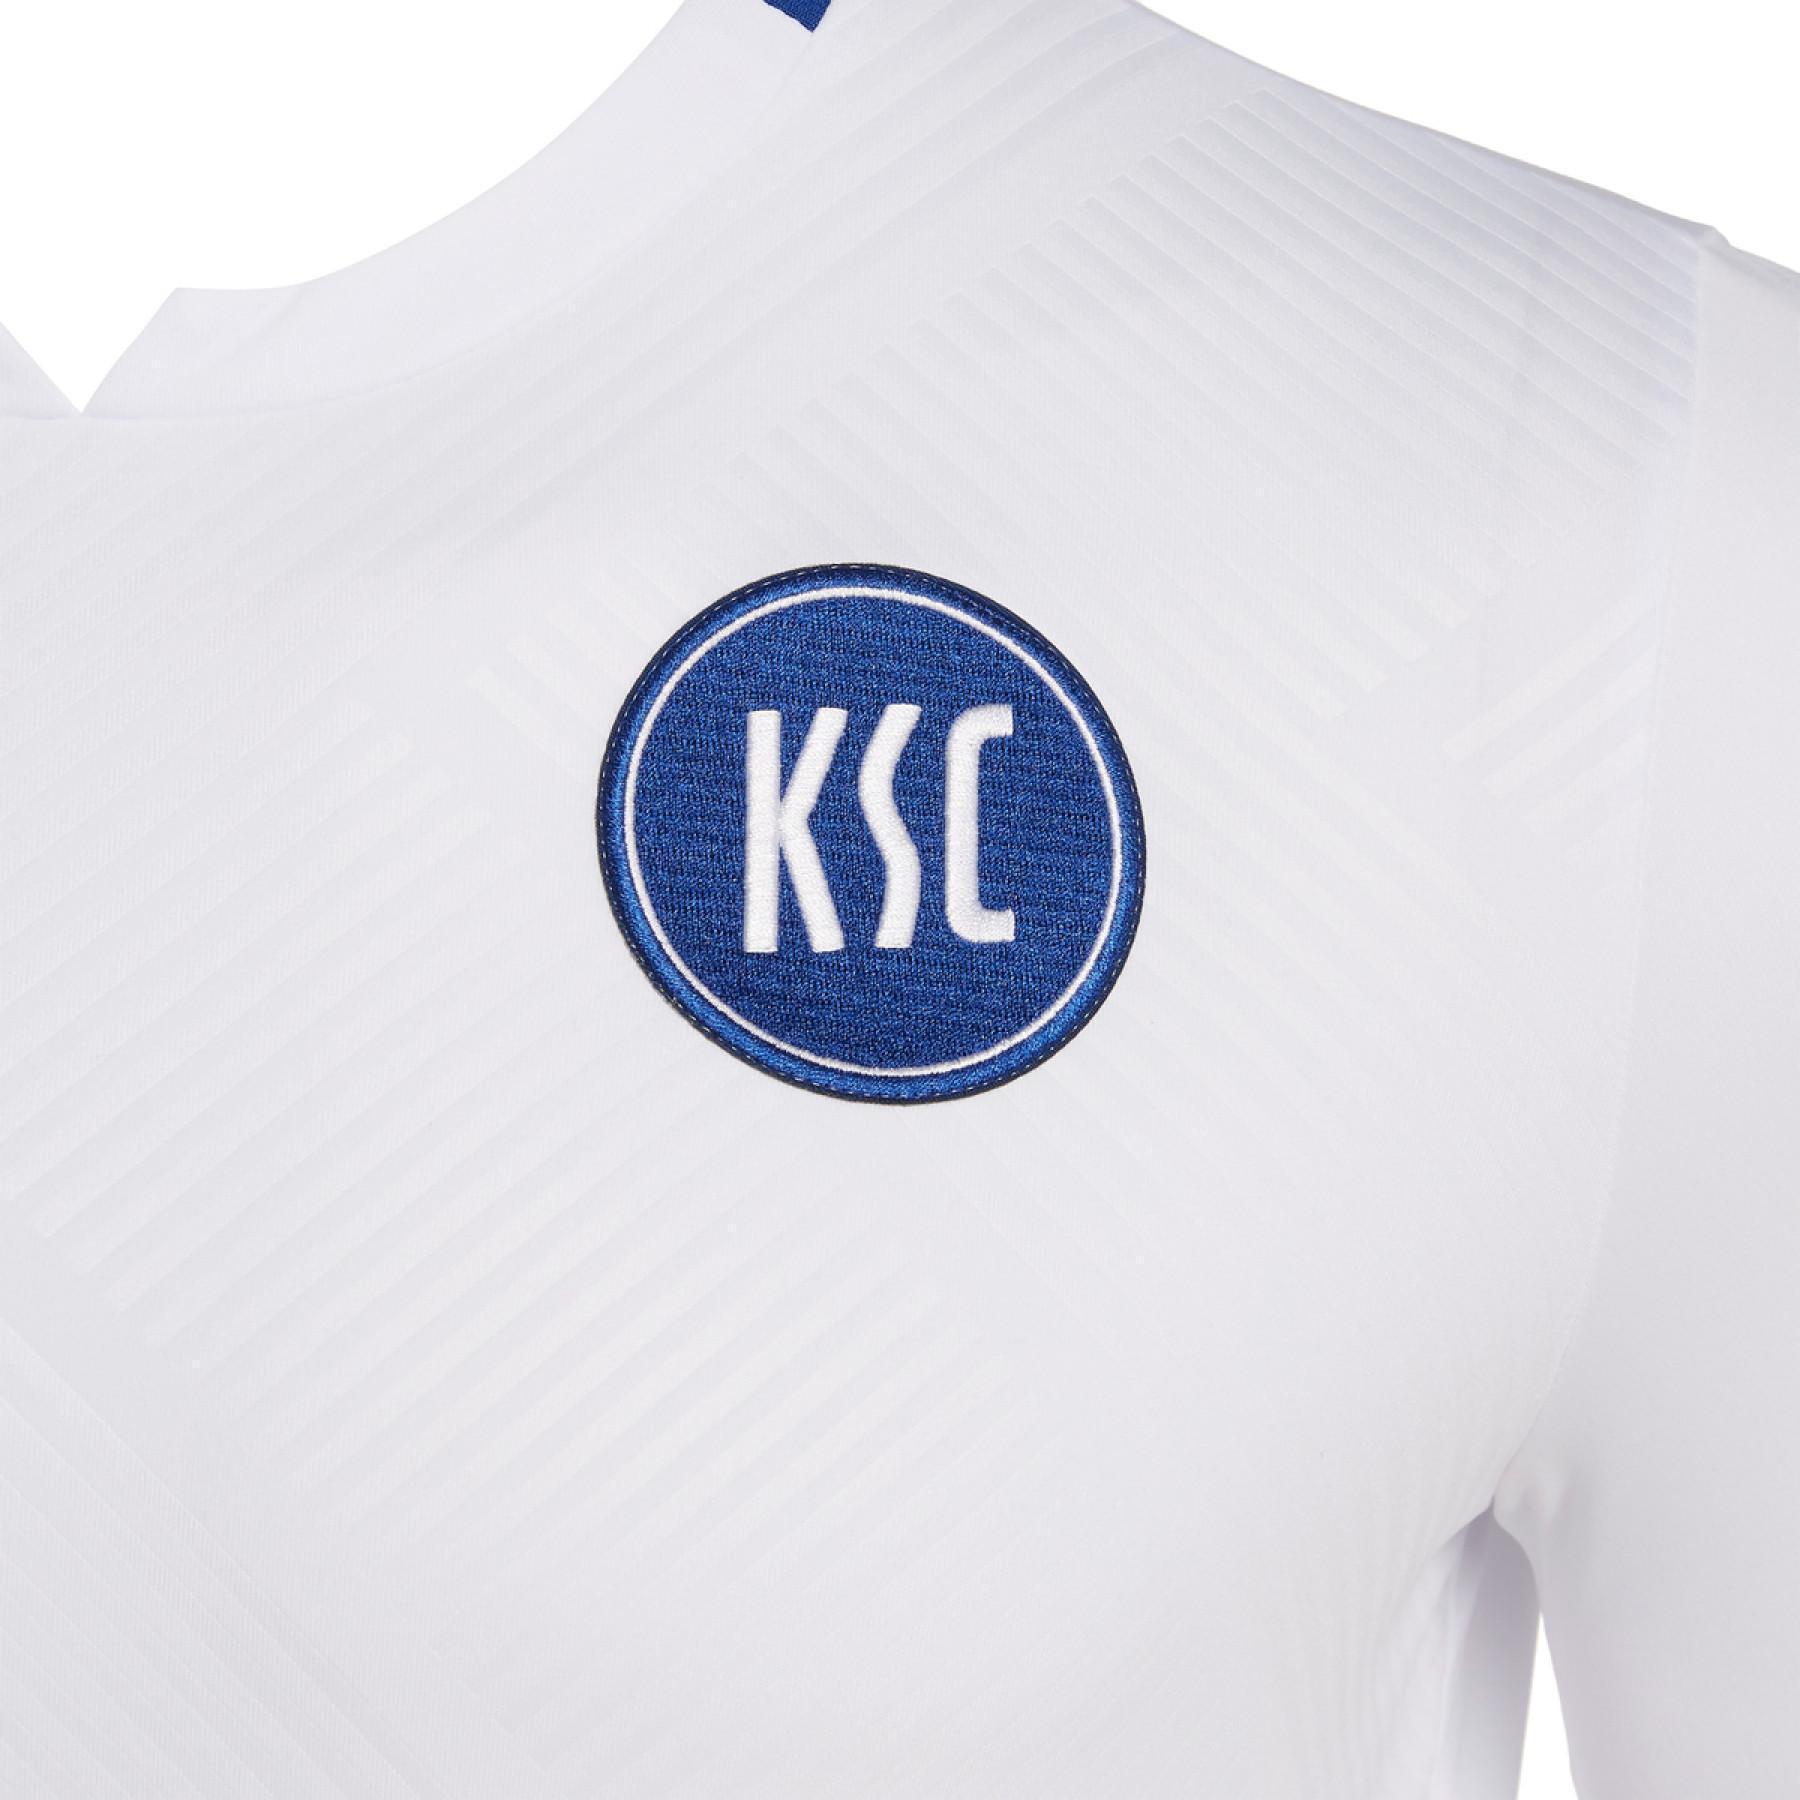 Outdoor jersey Karlsruher SC 2019/2020